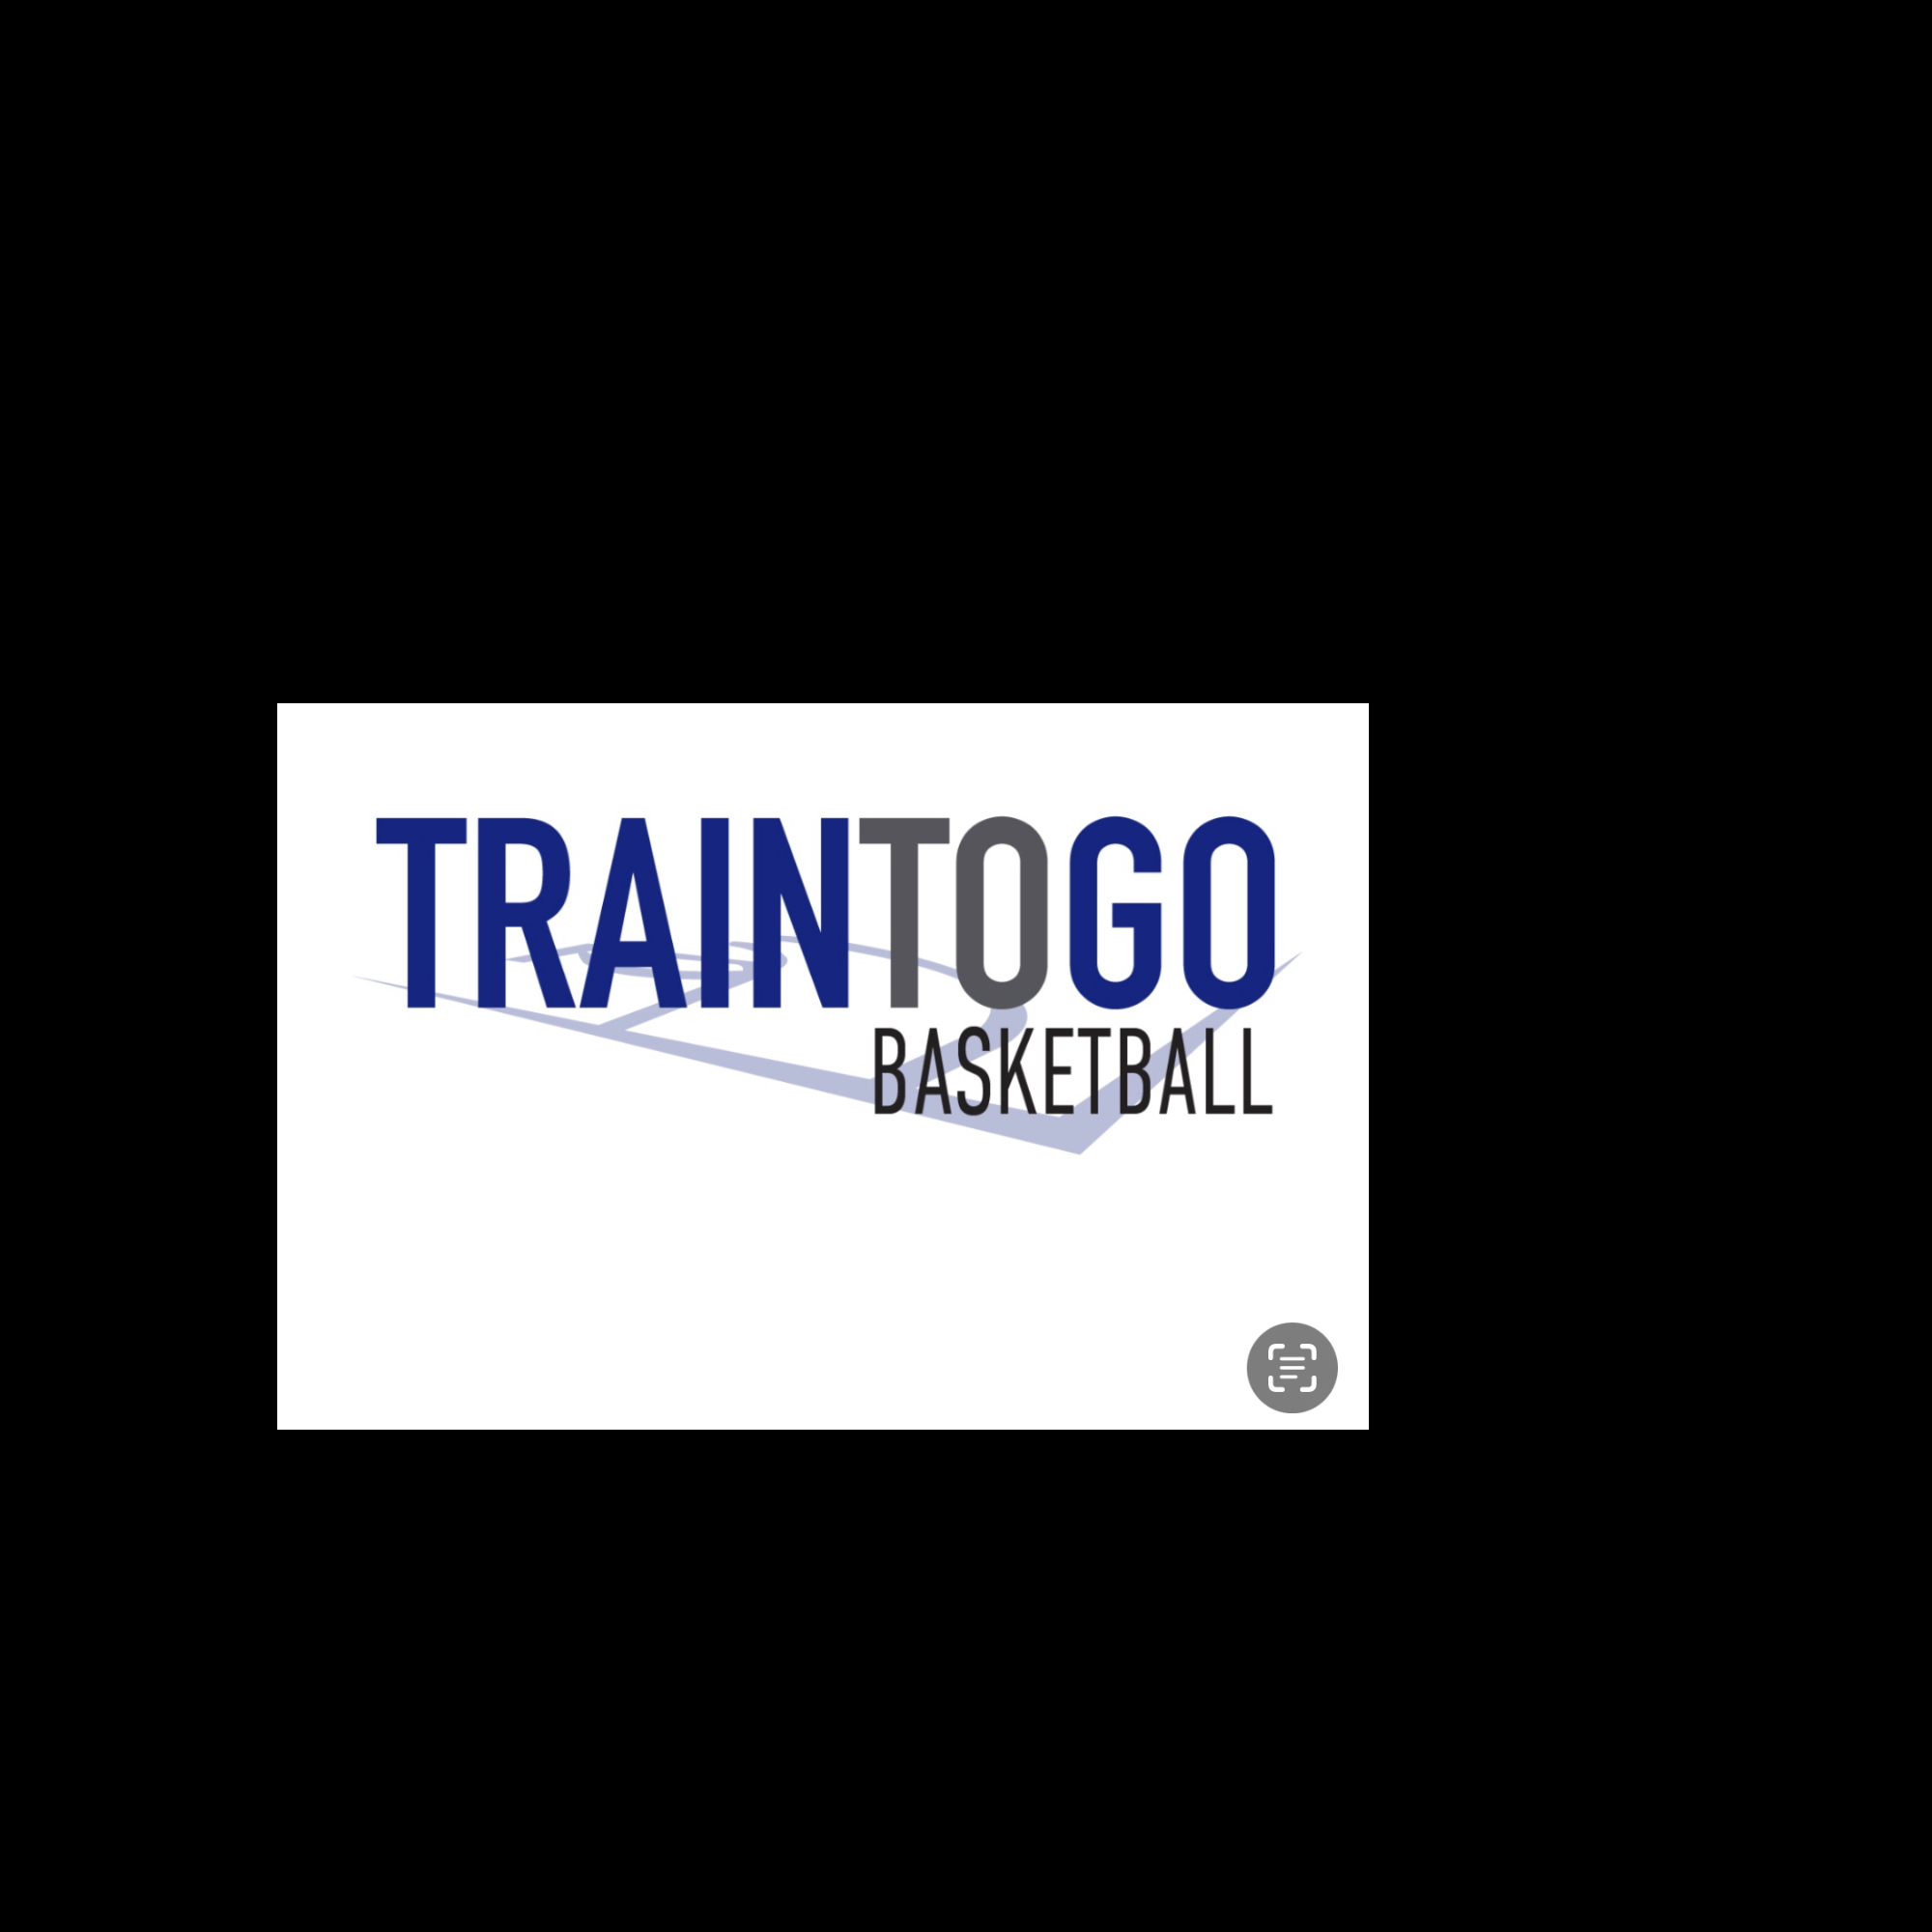 The official logo of TrainToGo